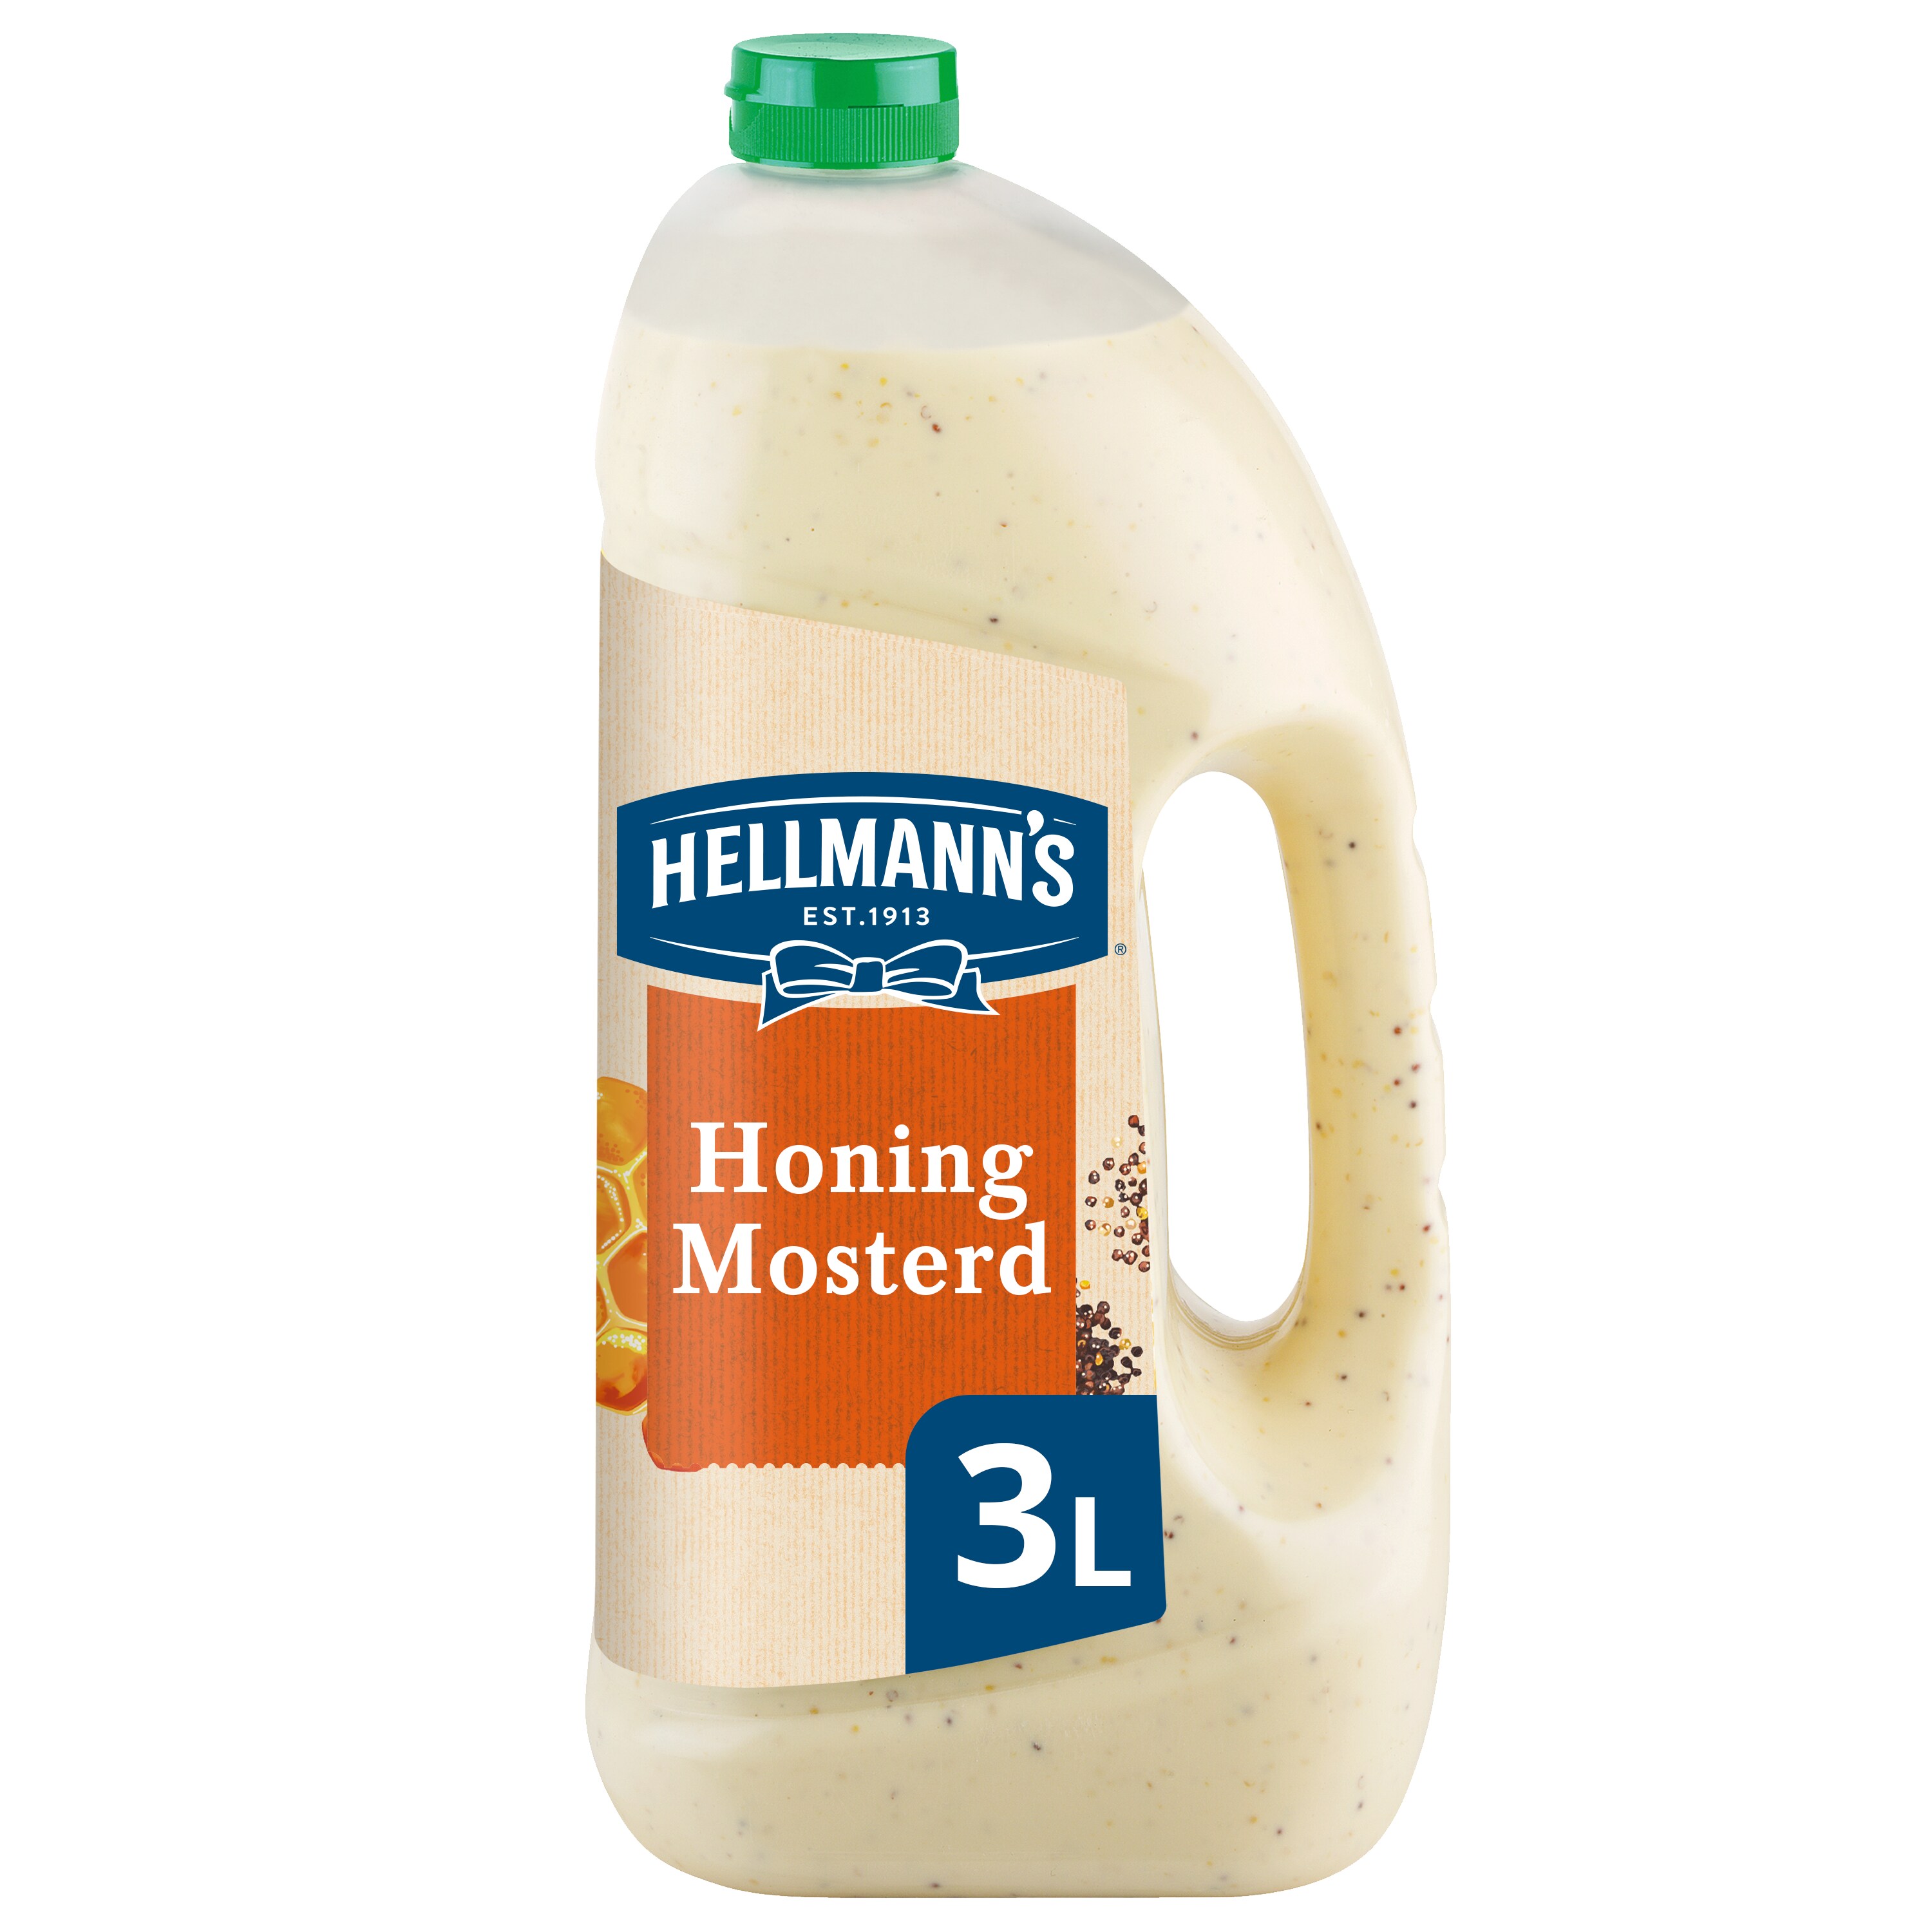 Hellmann's Honing Mosterd Dressing Vloeibaar 3L - 